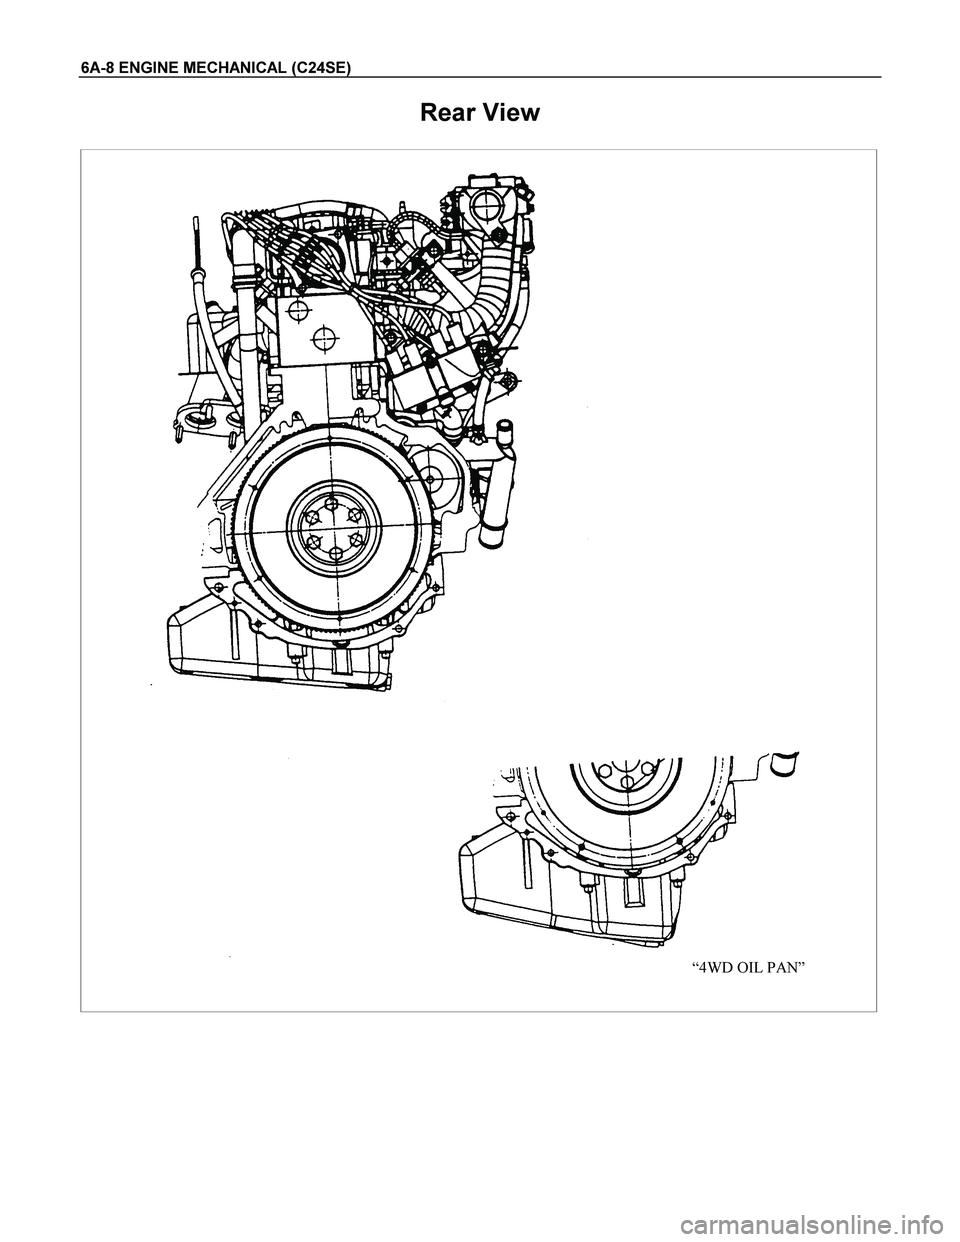 ISUZU TF SERIES 2004  Workshop Manual 6A-8 ENGINE MECHANICAL (C24SE) 
Rear View 
“4WD OIL PAN”
  